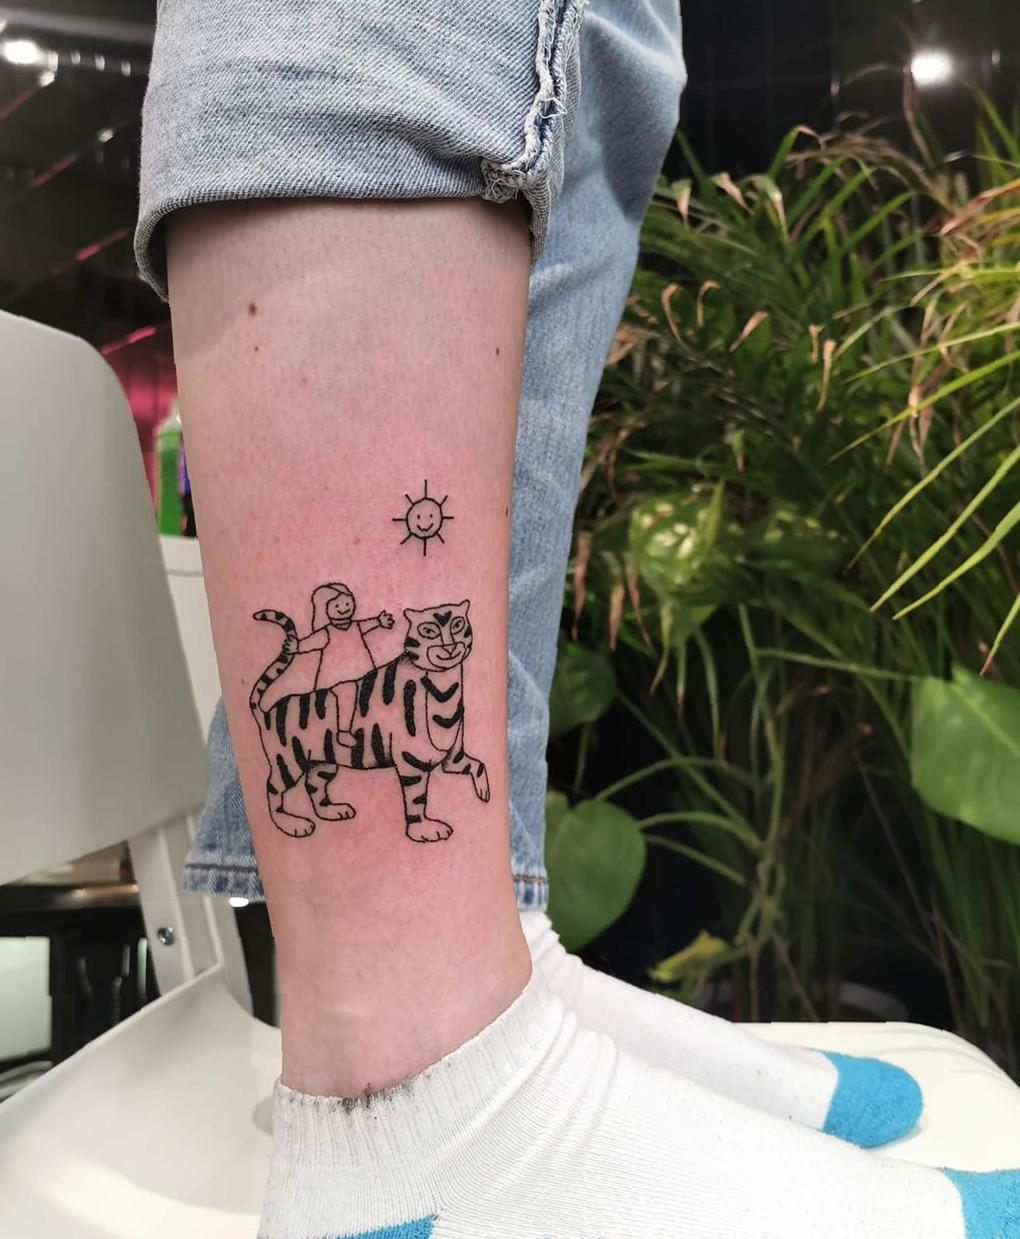 37 Extraordinary Female Calf Tattoos To Make You Jump Up With Joy calf tattoos,female tattoo,tattoo for women,tattoo trends,esthetic tattoo,ordinary tattoo